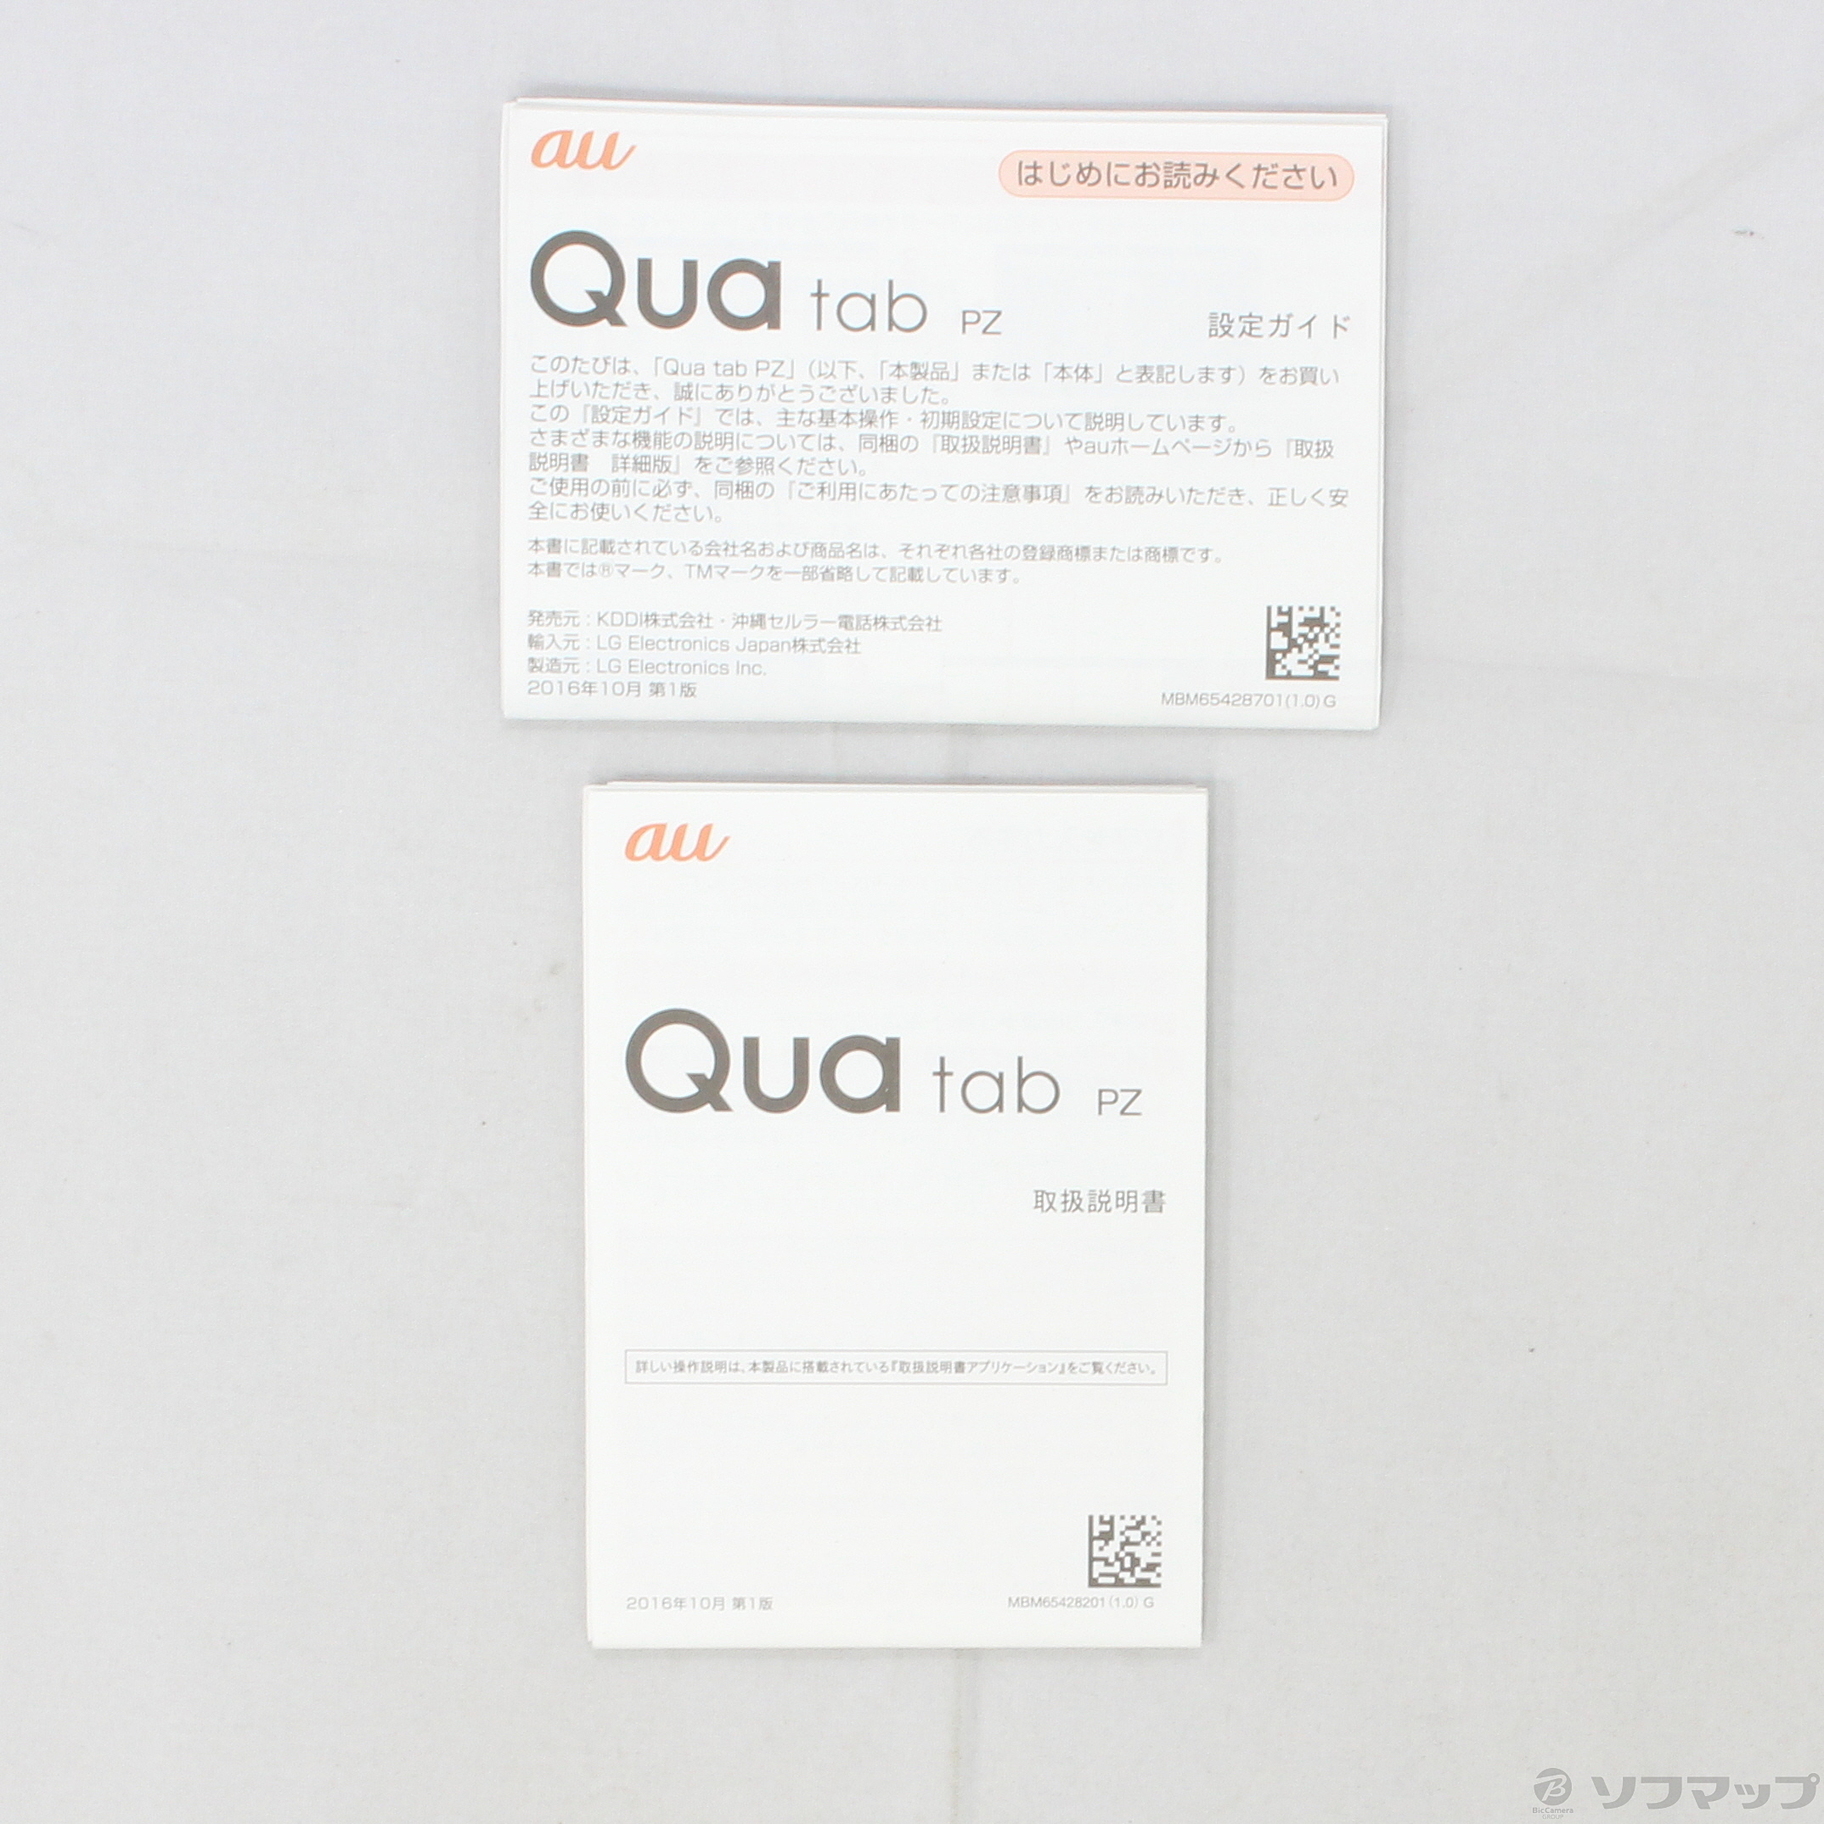 LG(エルジー) Qua Tab PZ 16GB ネイビー LGT32 Au iPad | www.vinoflix.com